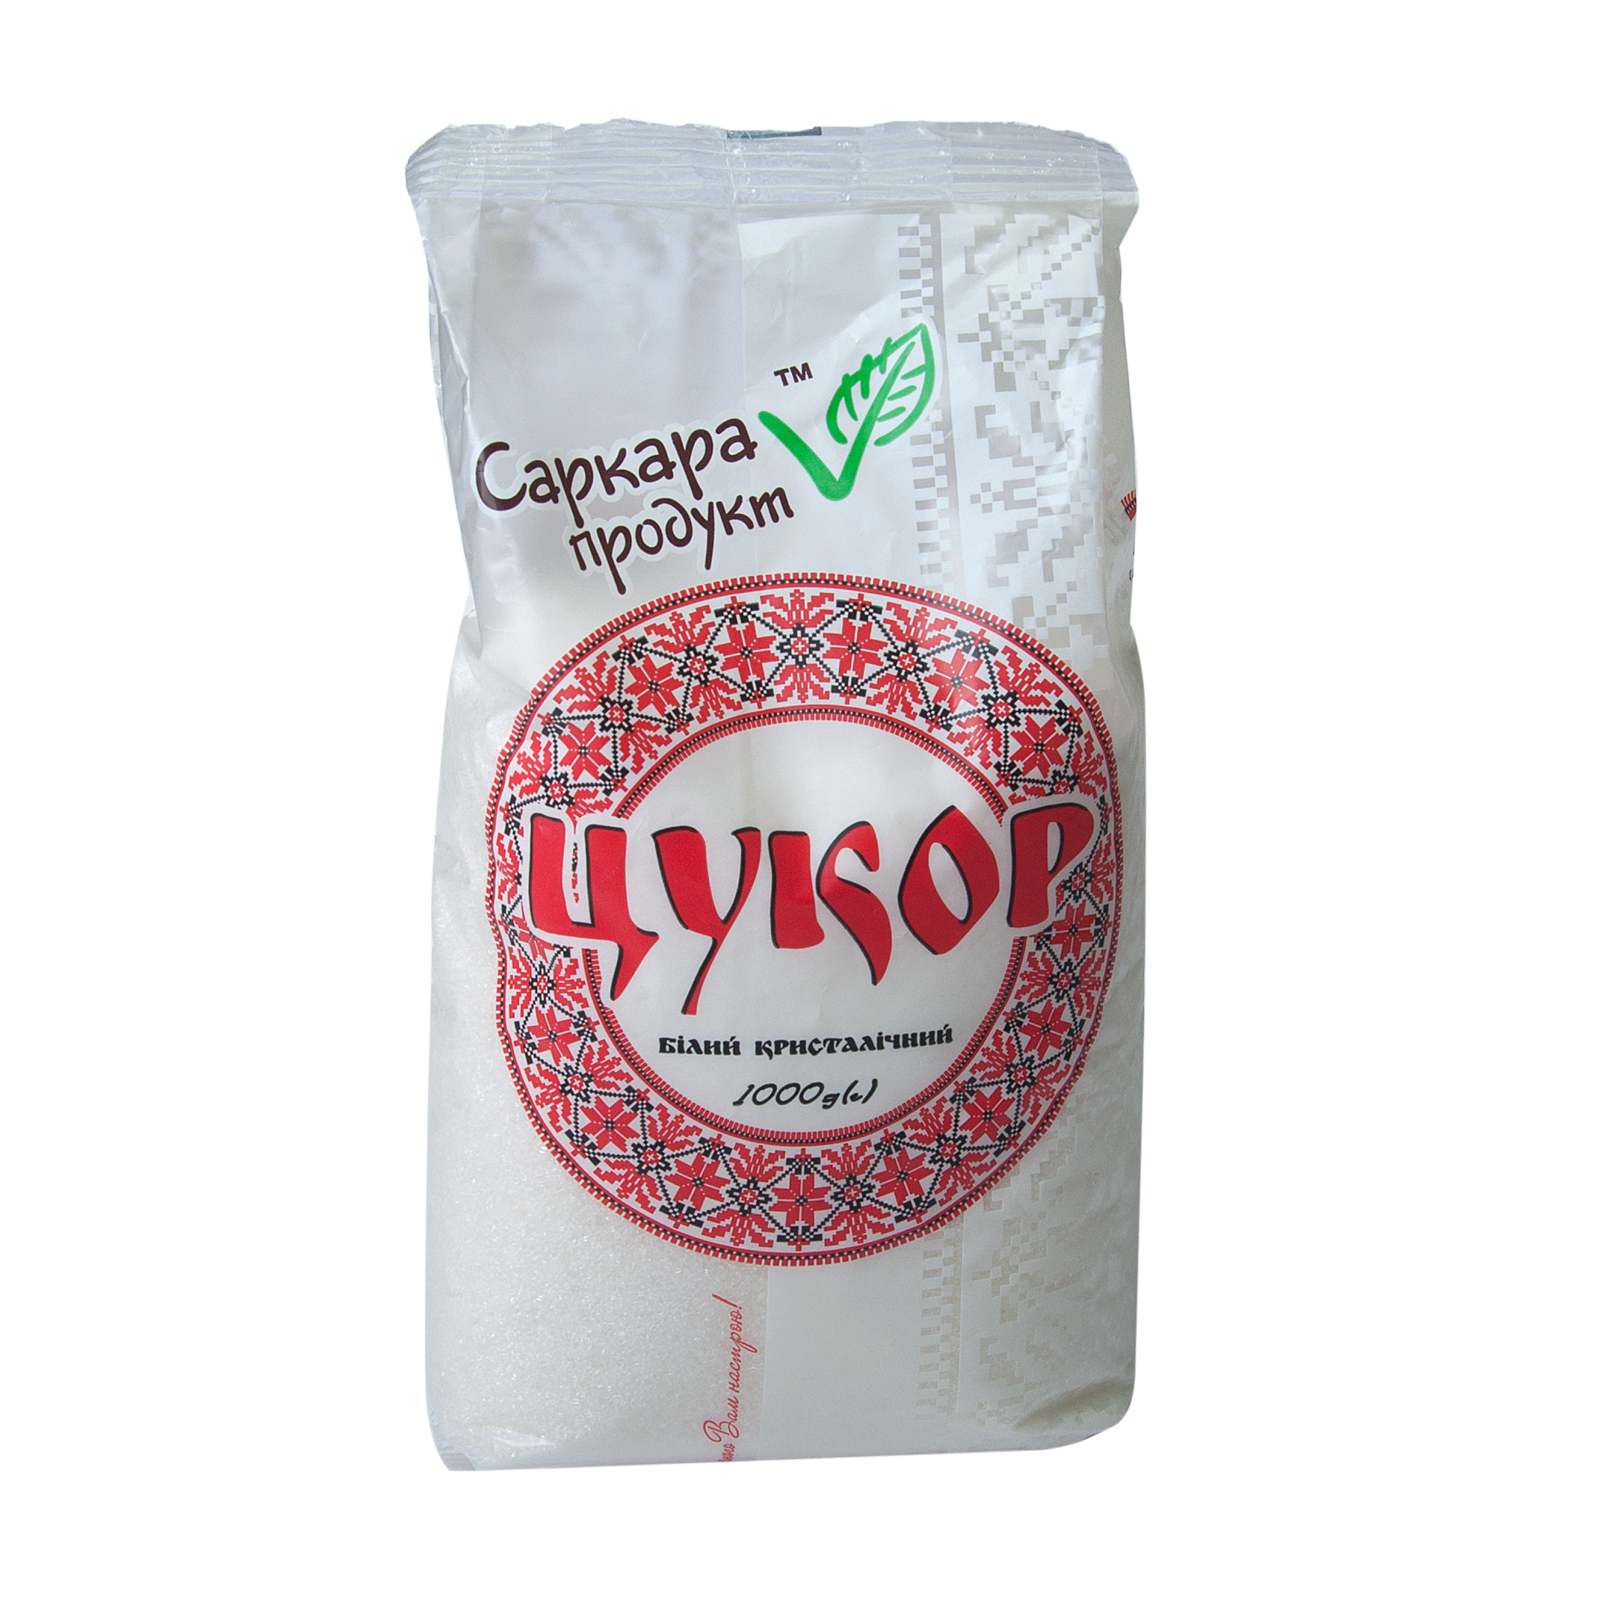 Сахар Саркара продукт 1 кг (пакет) (11003)